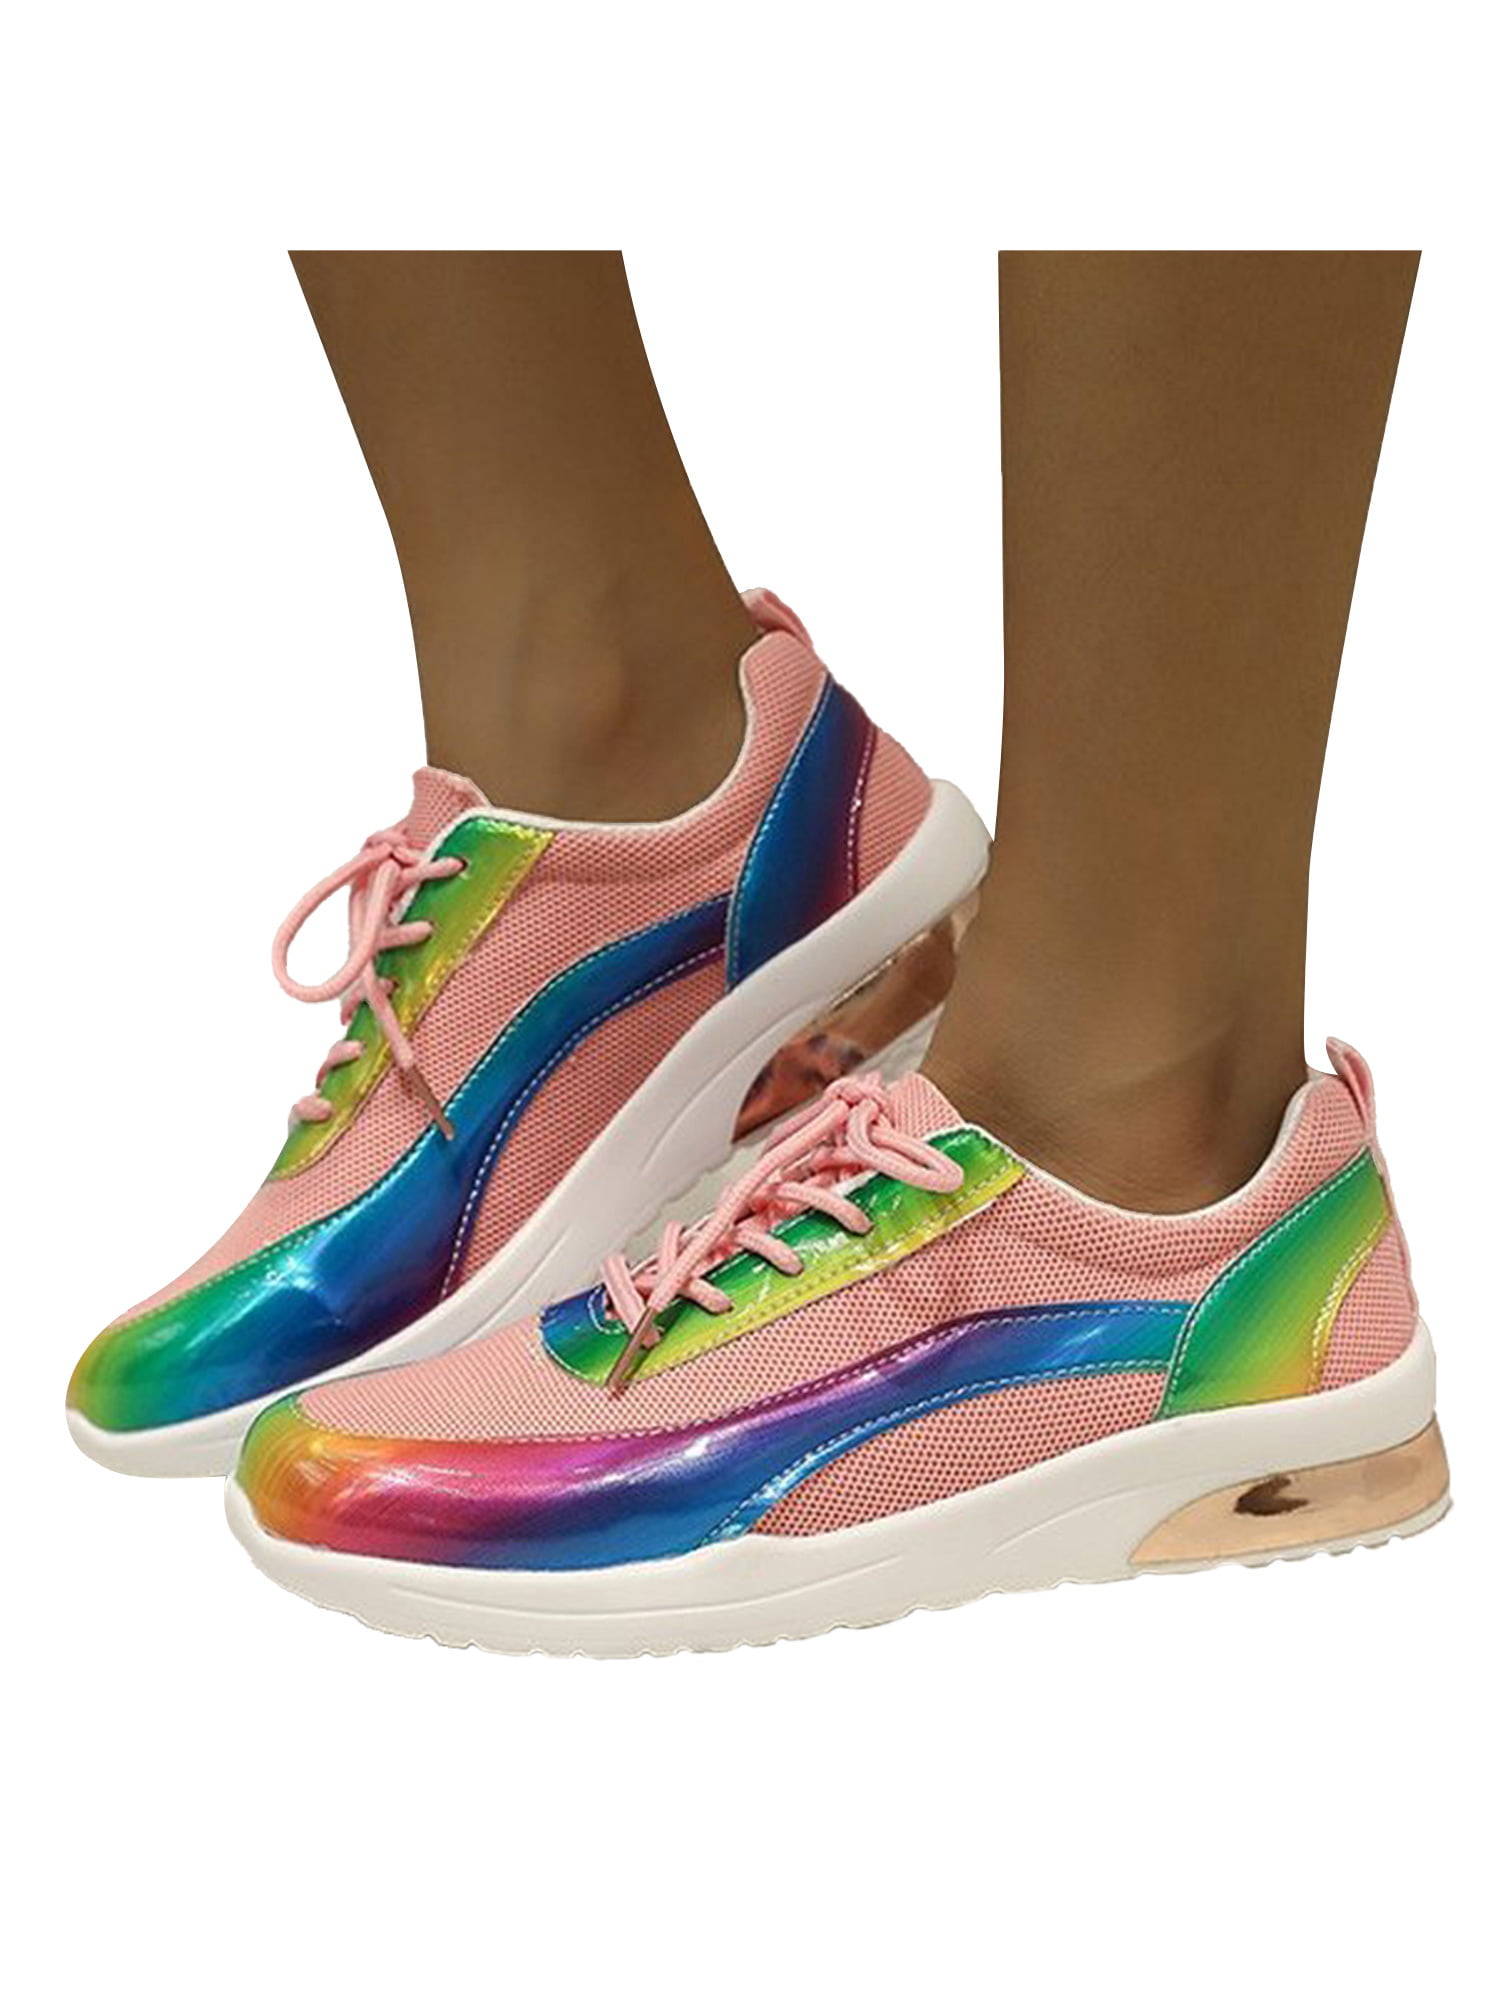 Hotsale 1Pair Rainbow Multi-Color Round Sport Shoe Unisex Lace SneakerShoel W5U4 